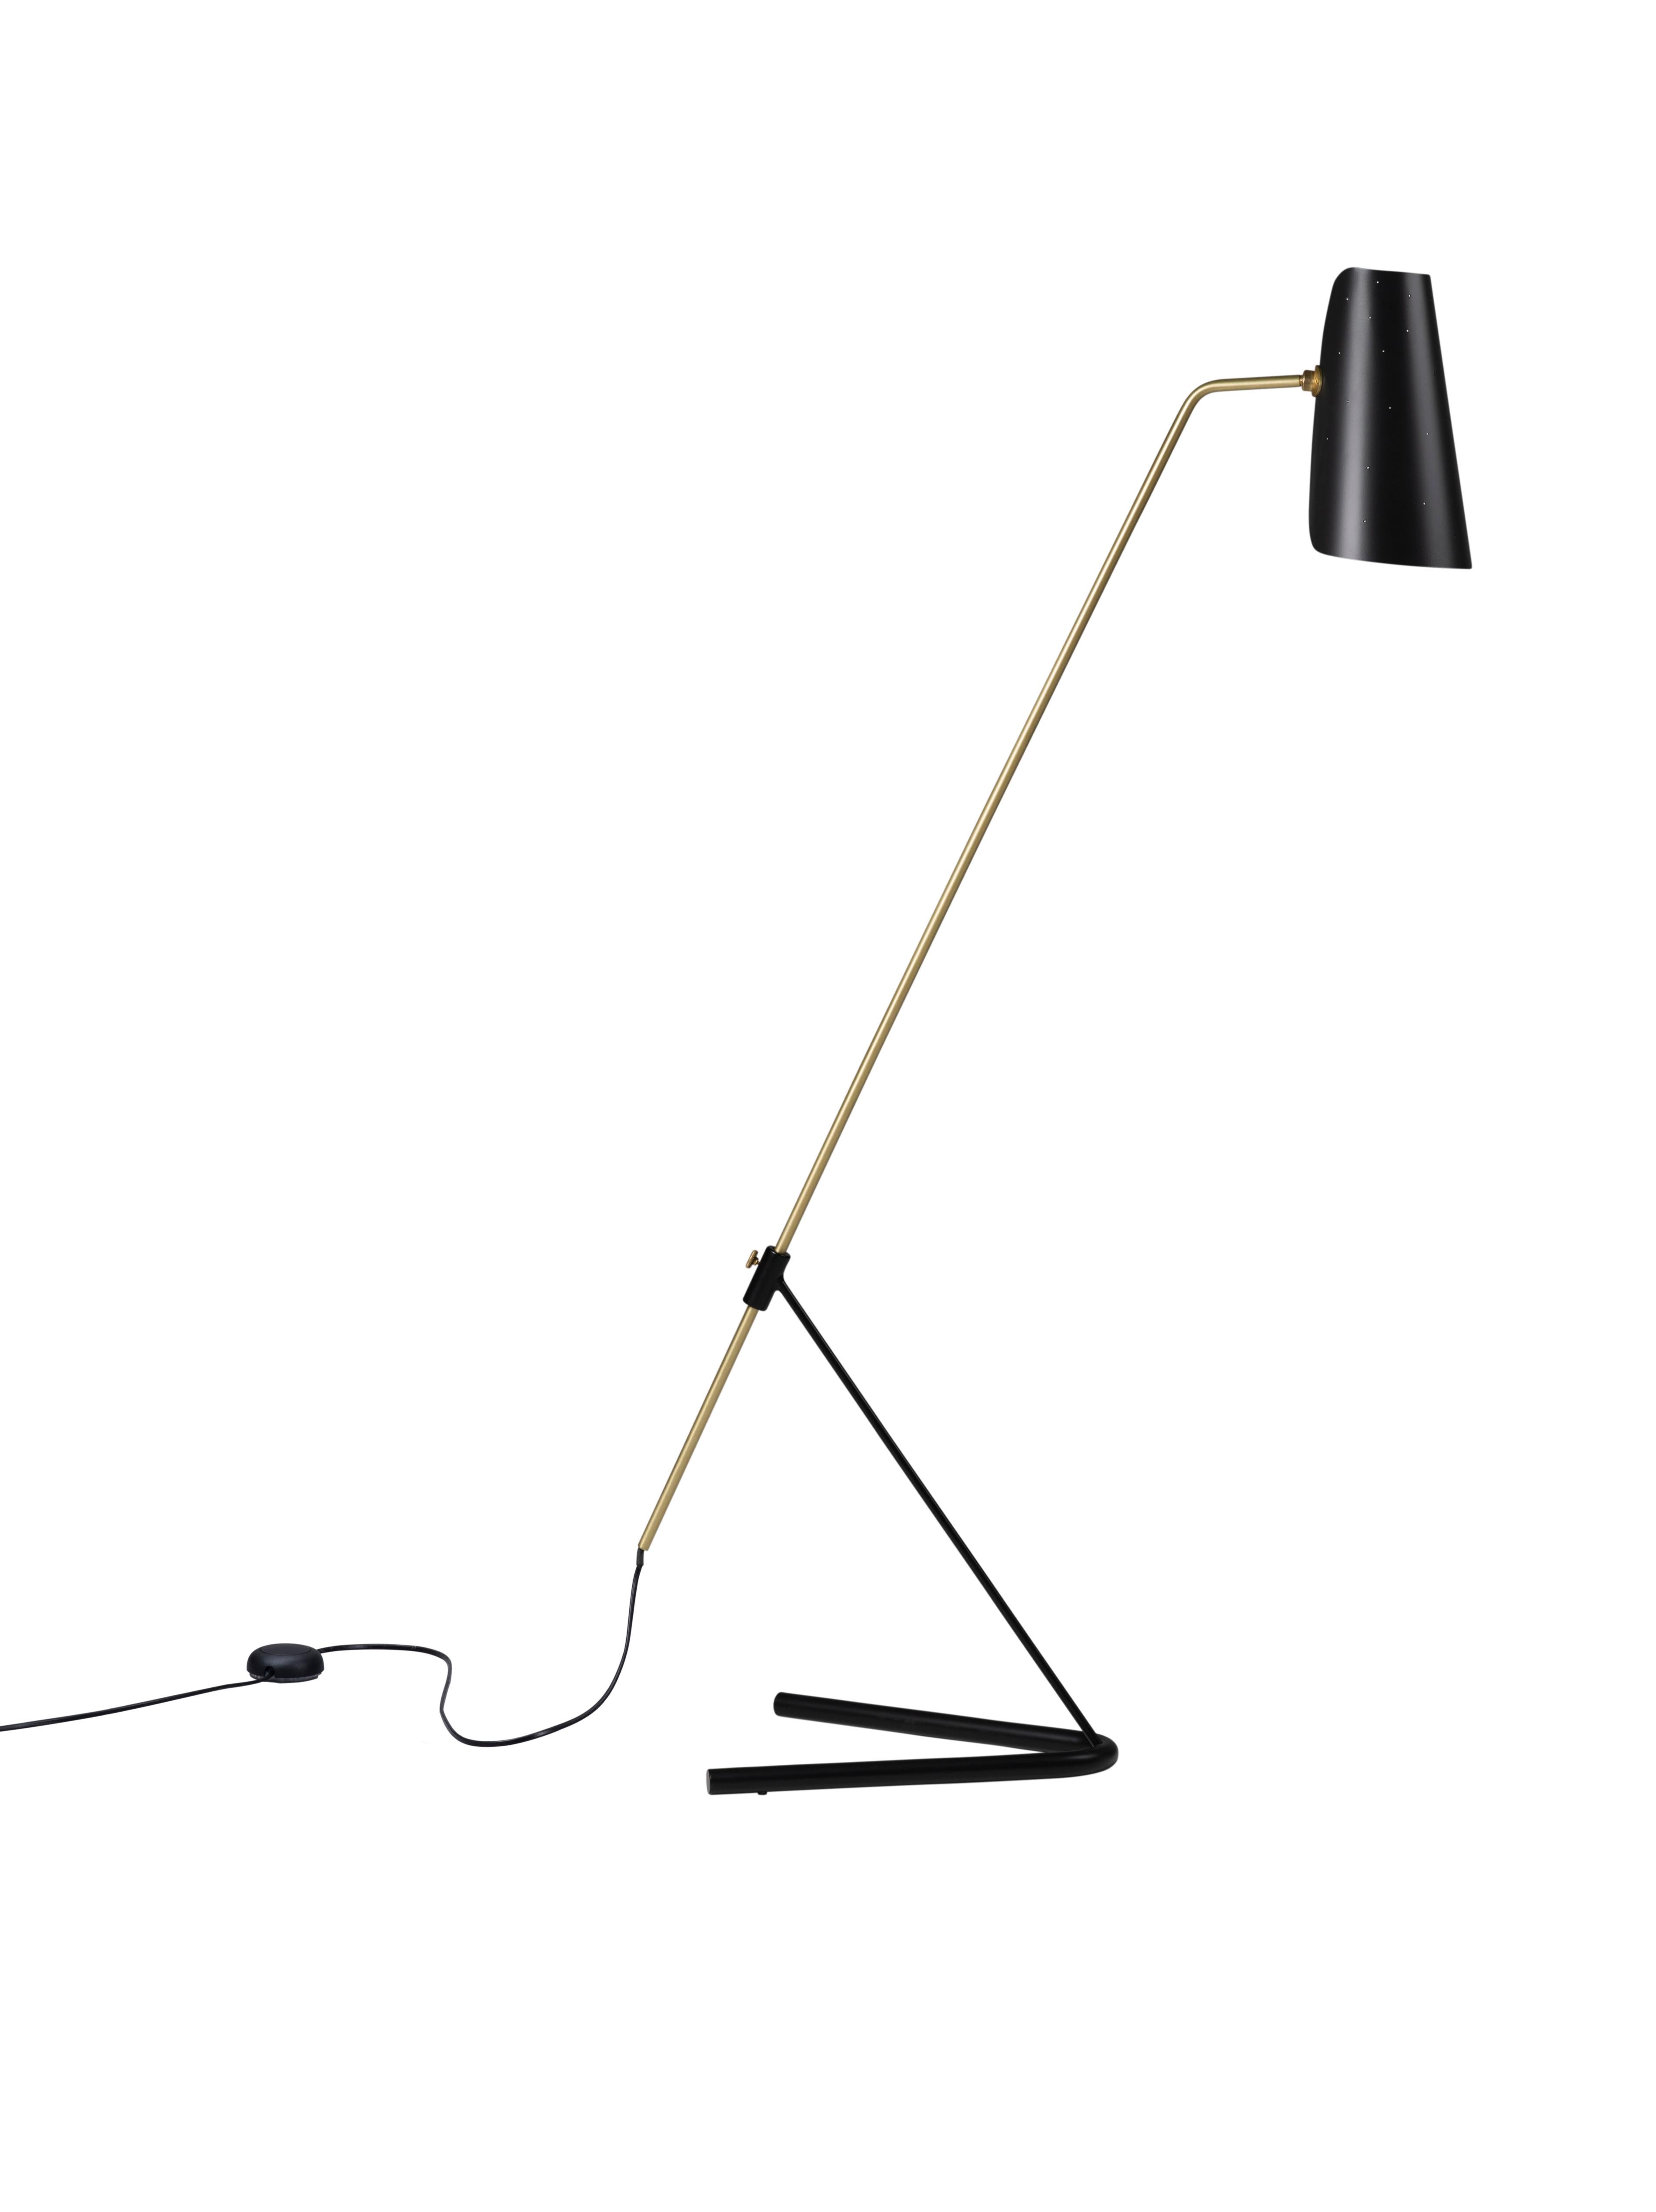 Pierre Guariche 'G21' Adjustable Floor Lamp for Sammode Studio in Black For Sale 1